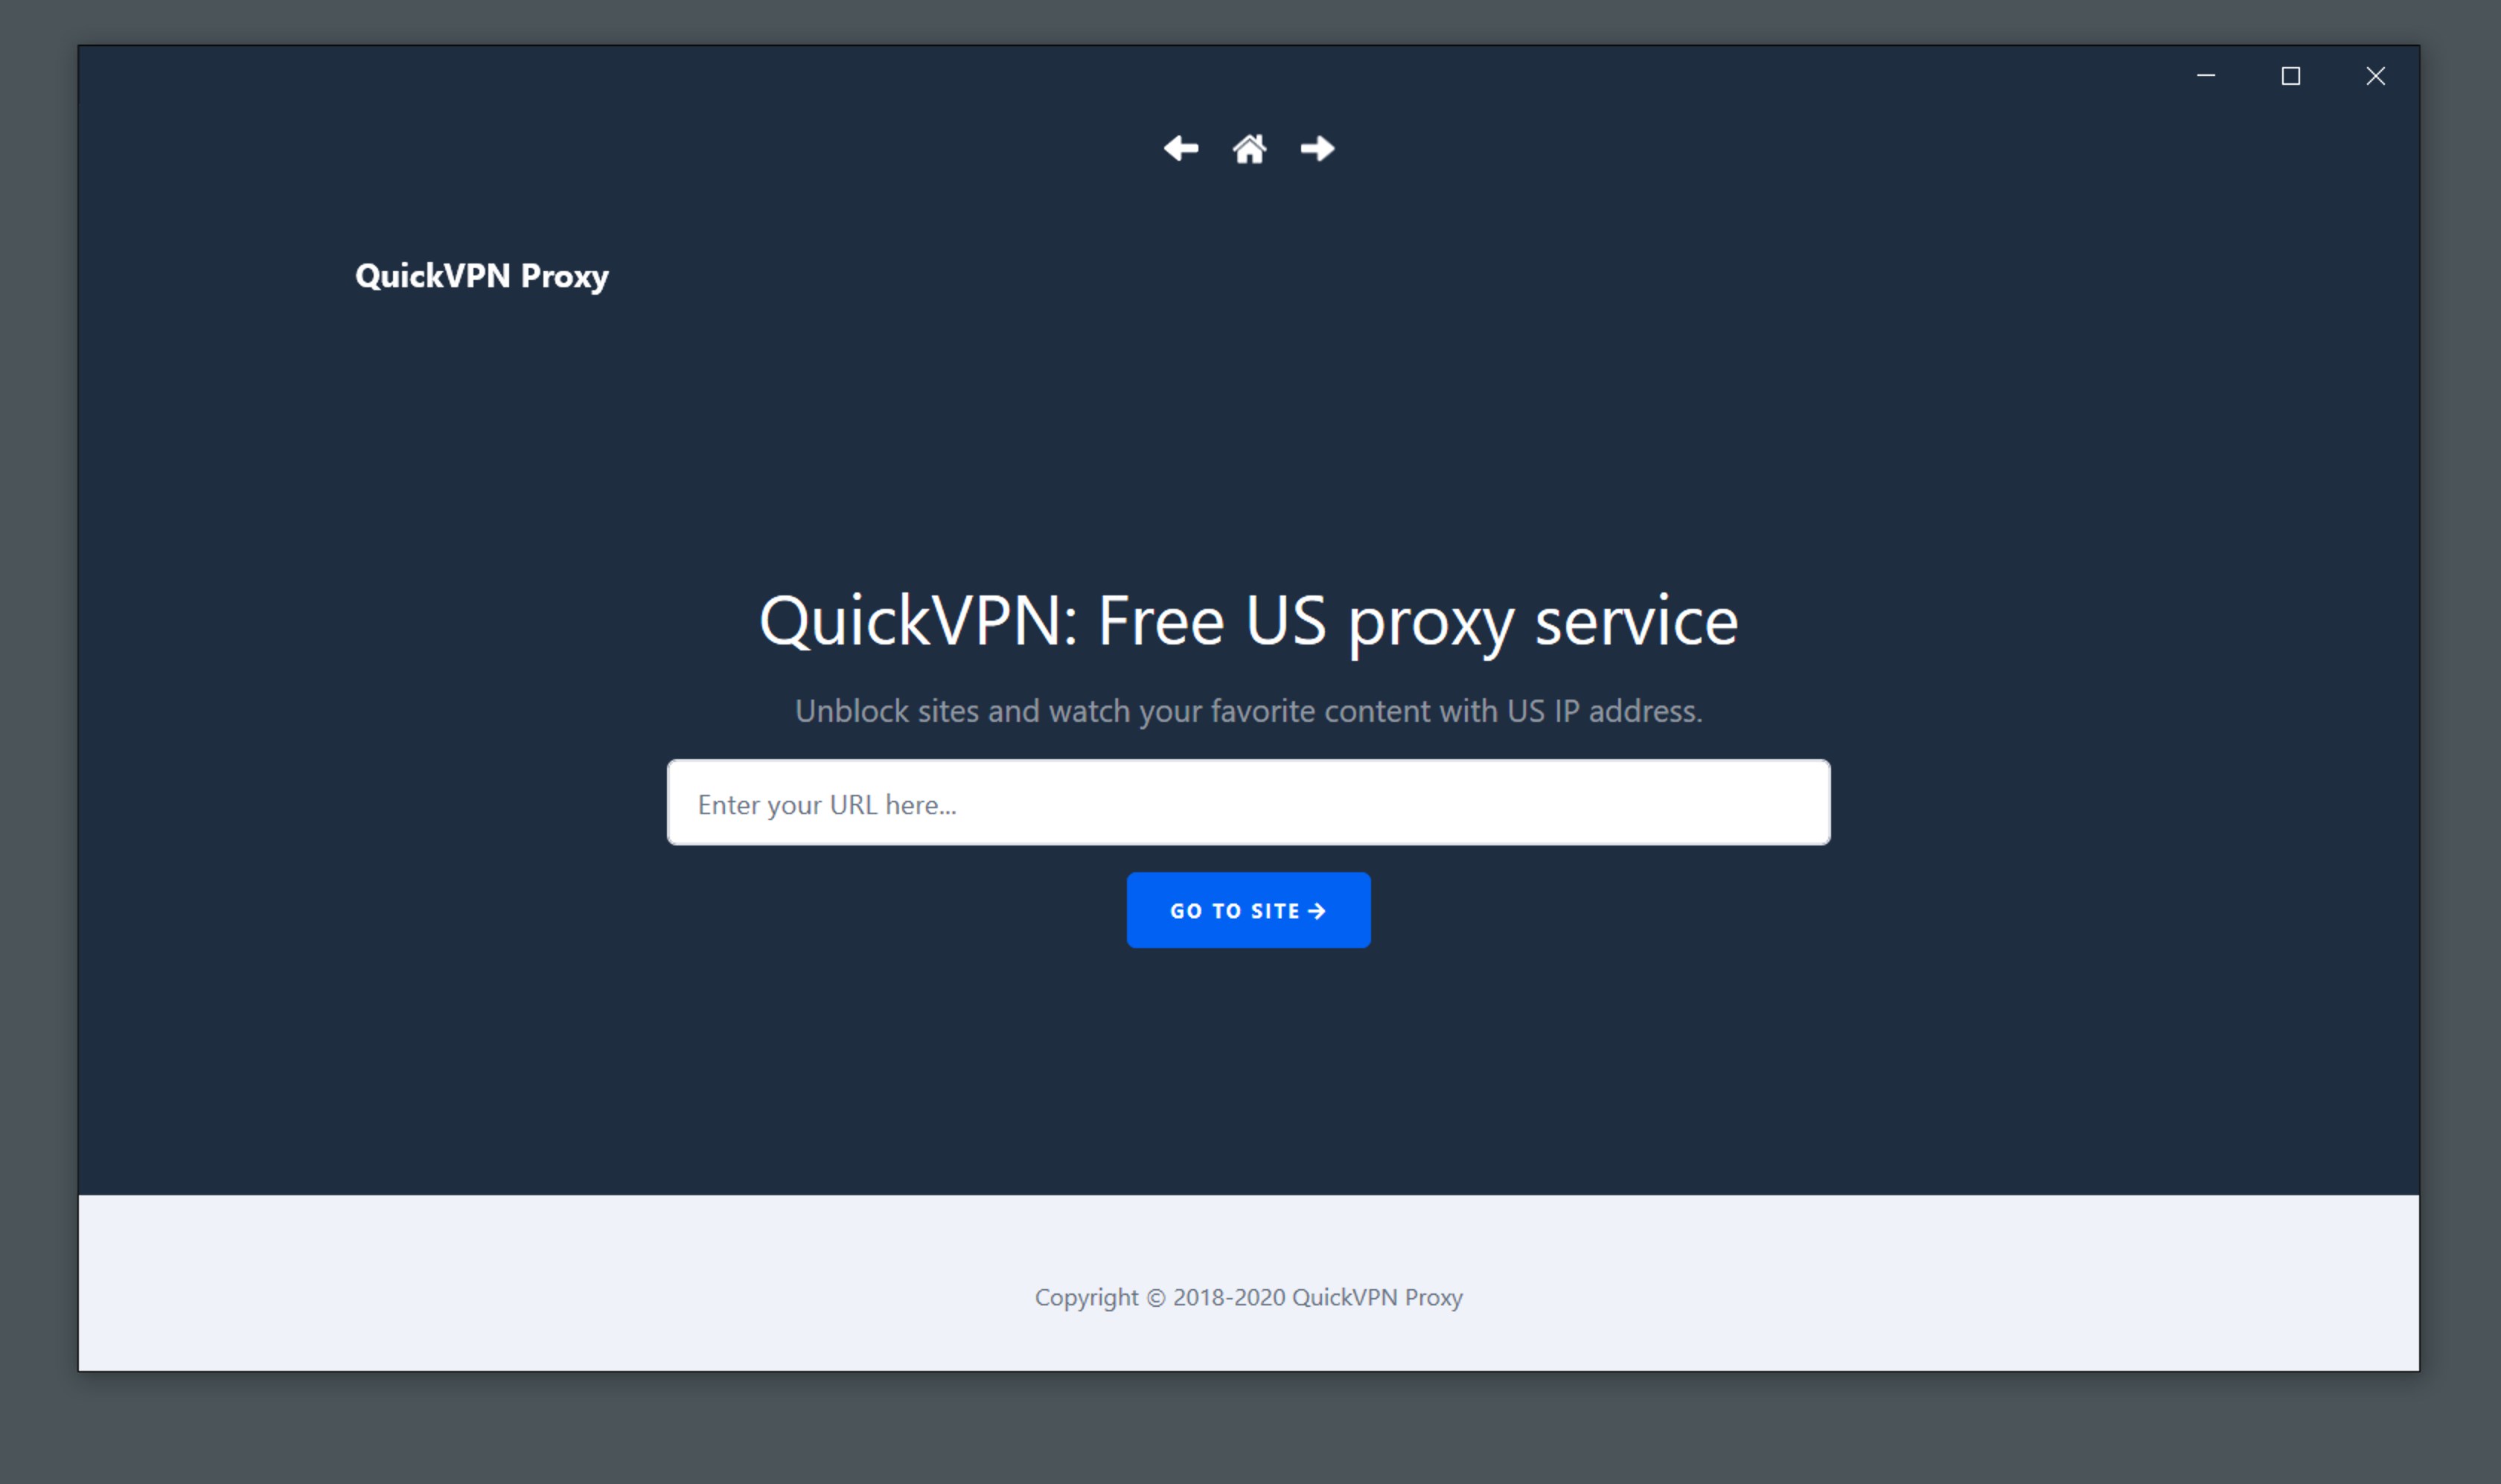 Is Quick VPN free?